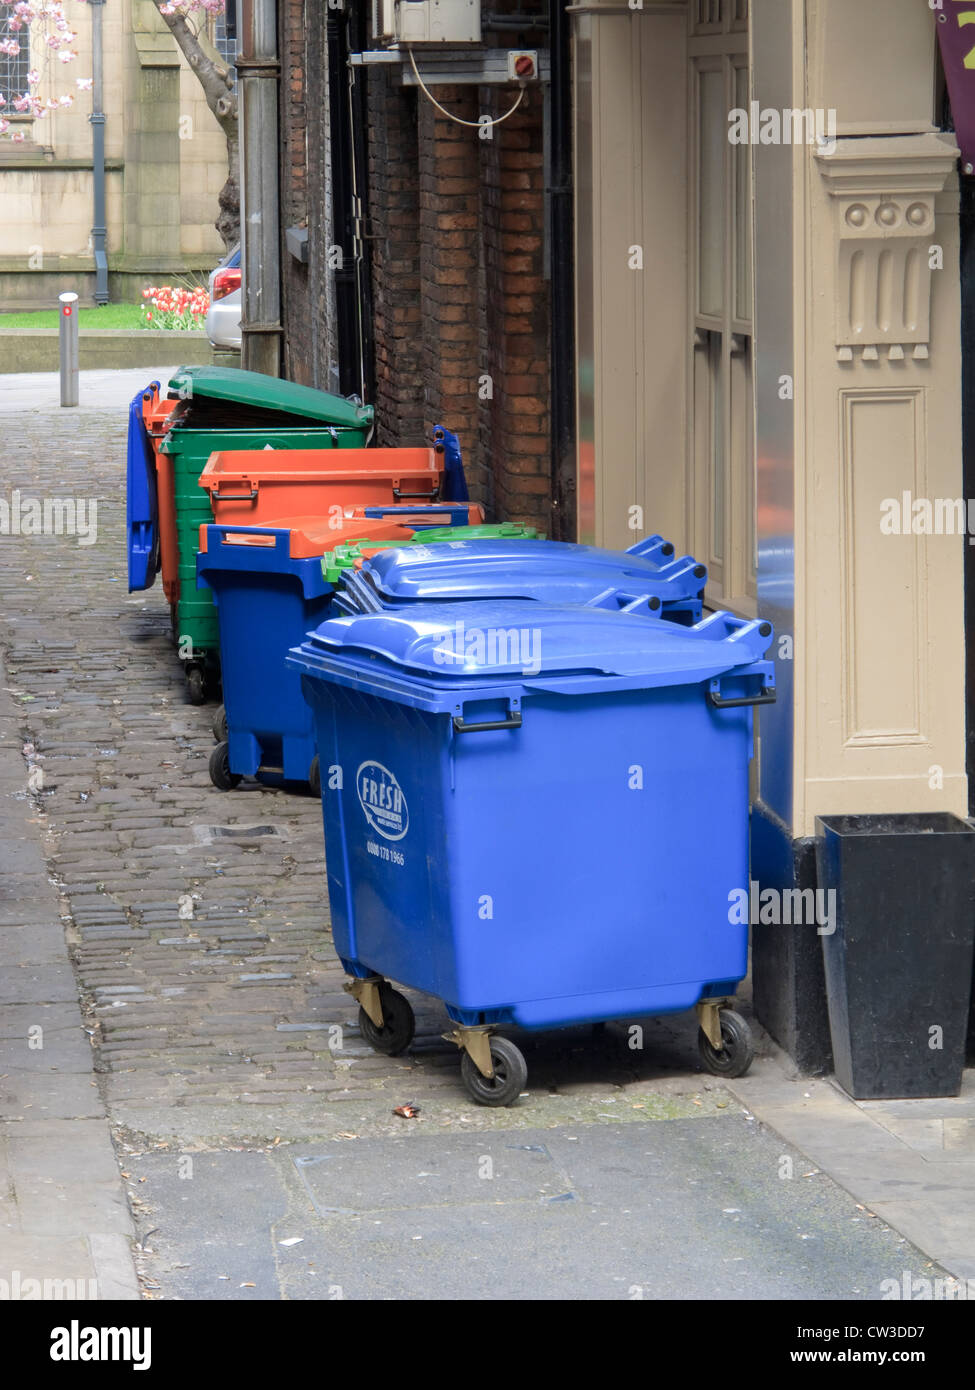 recycling bins waste Stock Photo